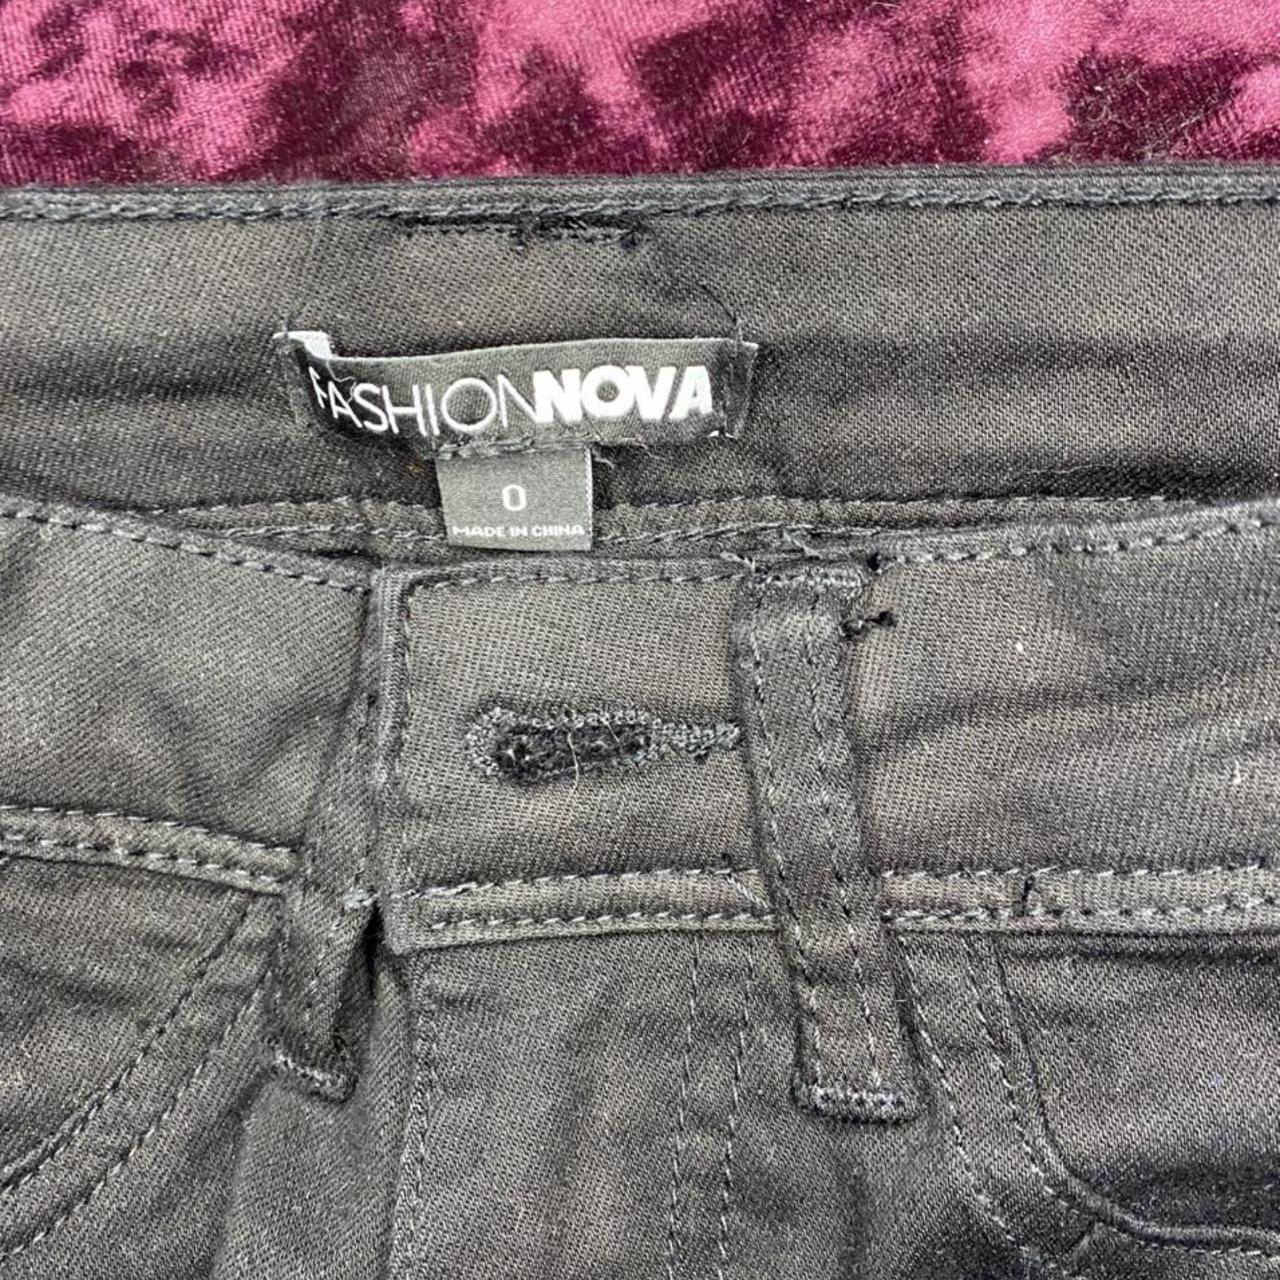 Product Image 3 - Black ripped jeans 
Fashion Nova